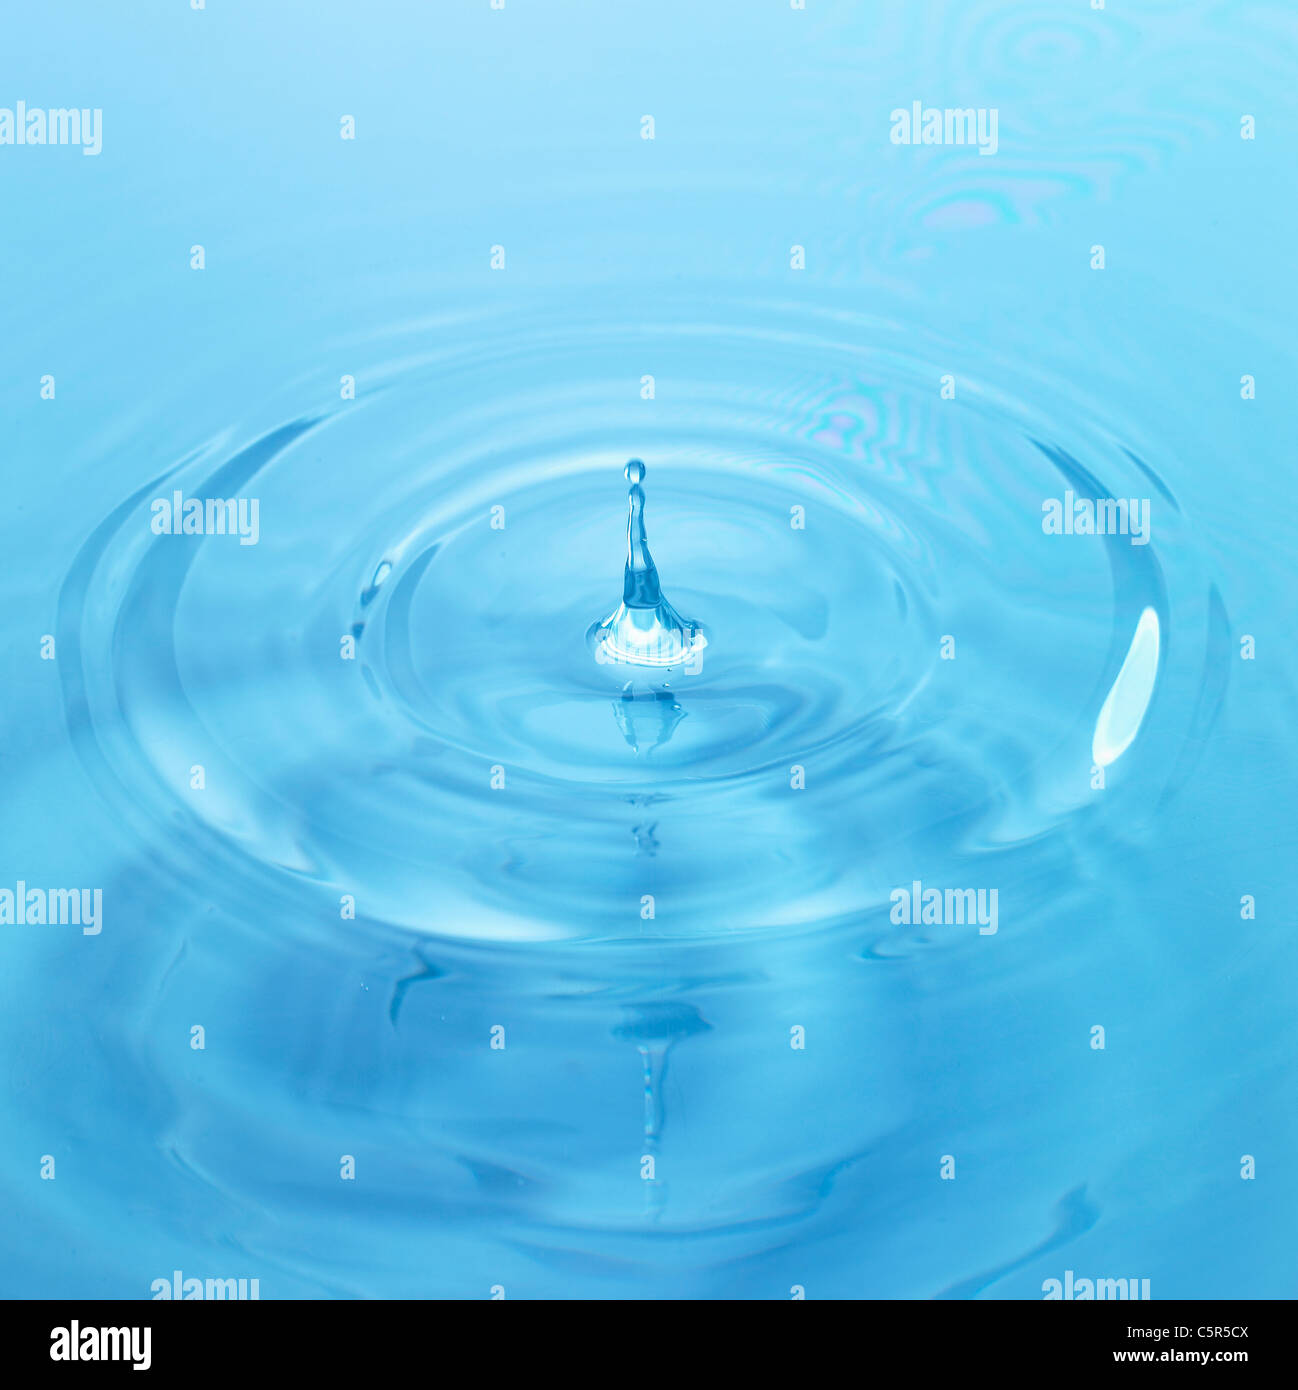 Water ripple Stock Photo